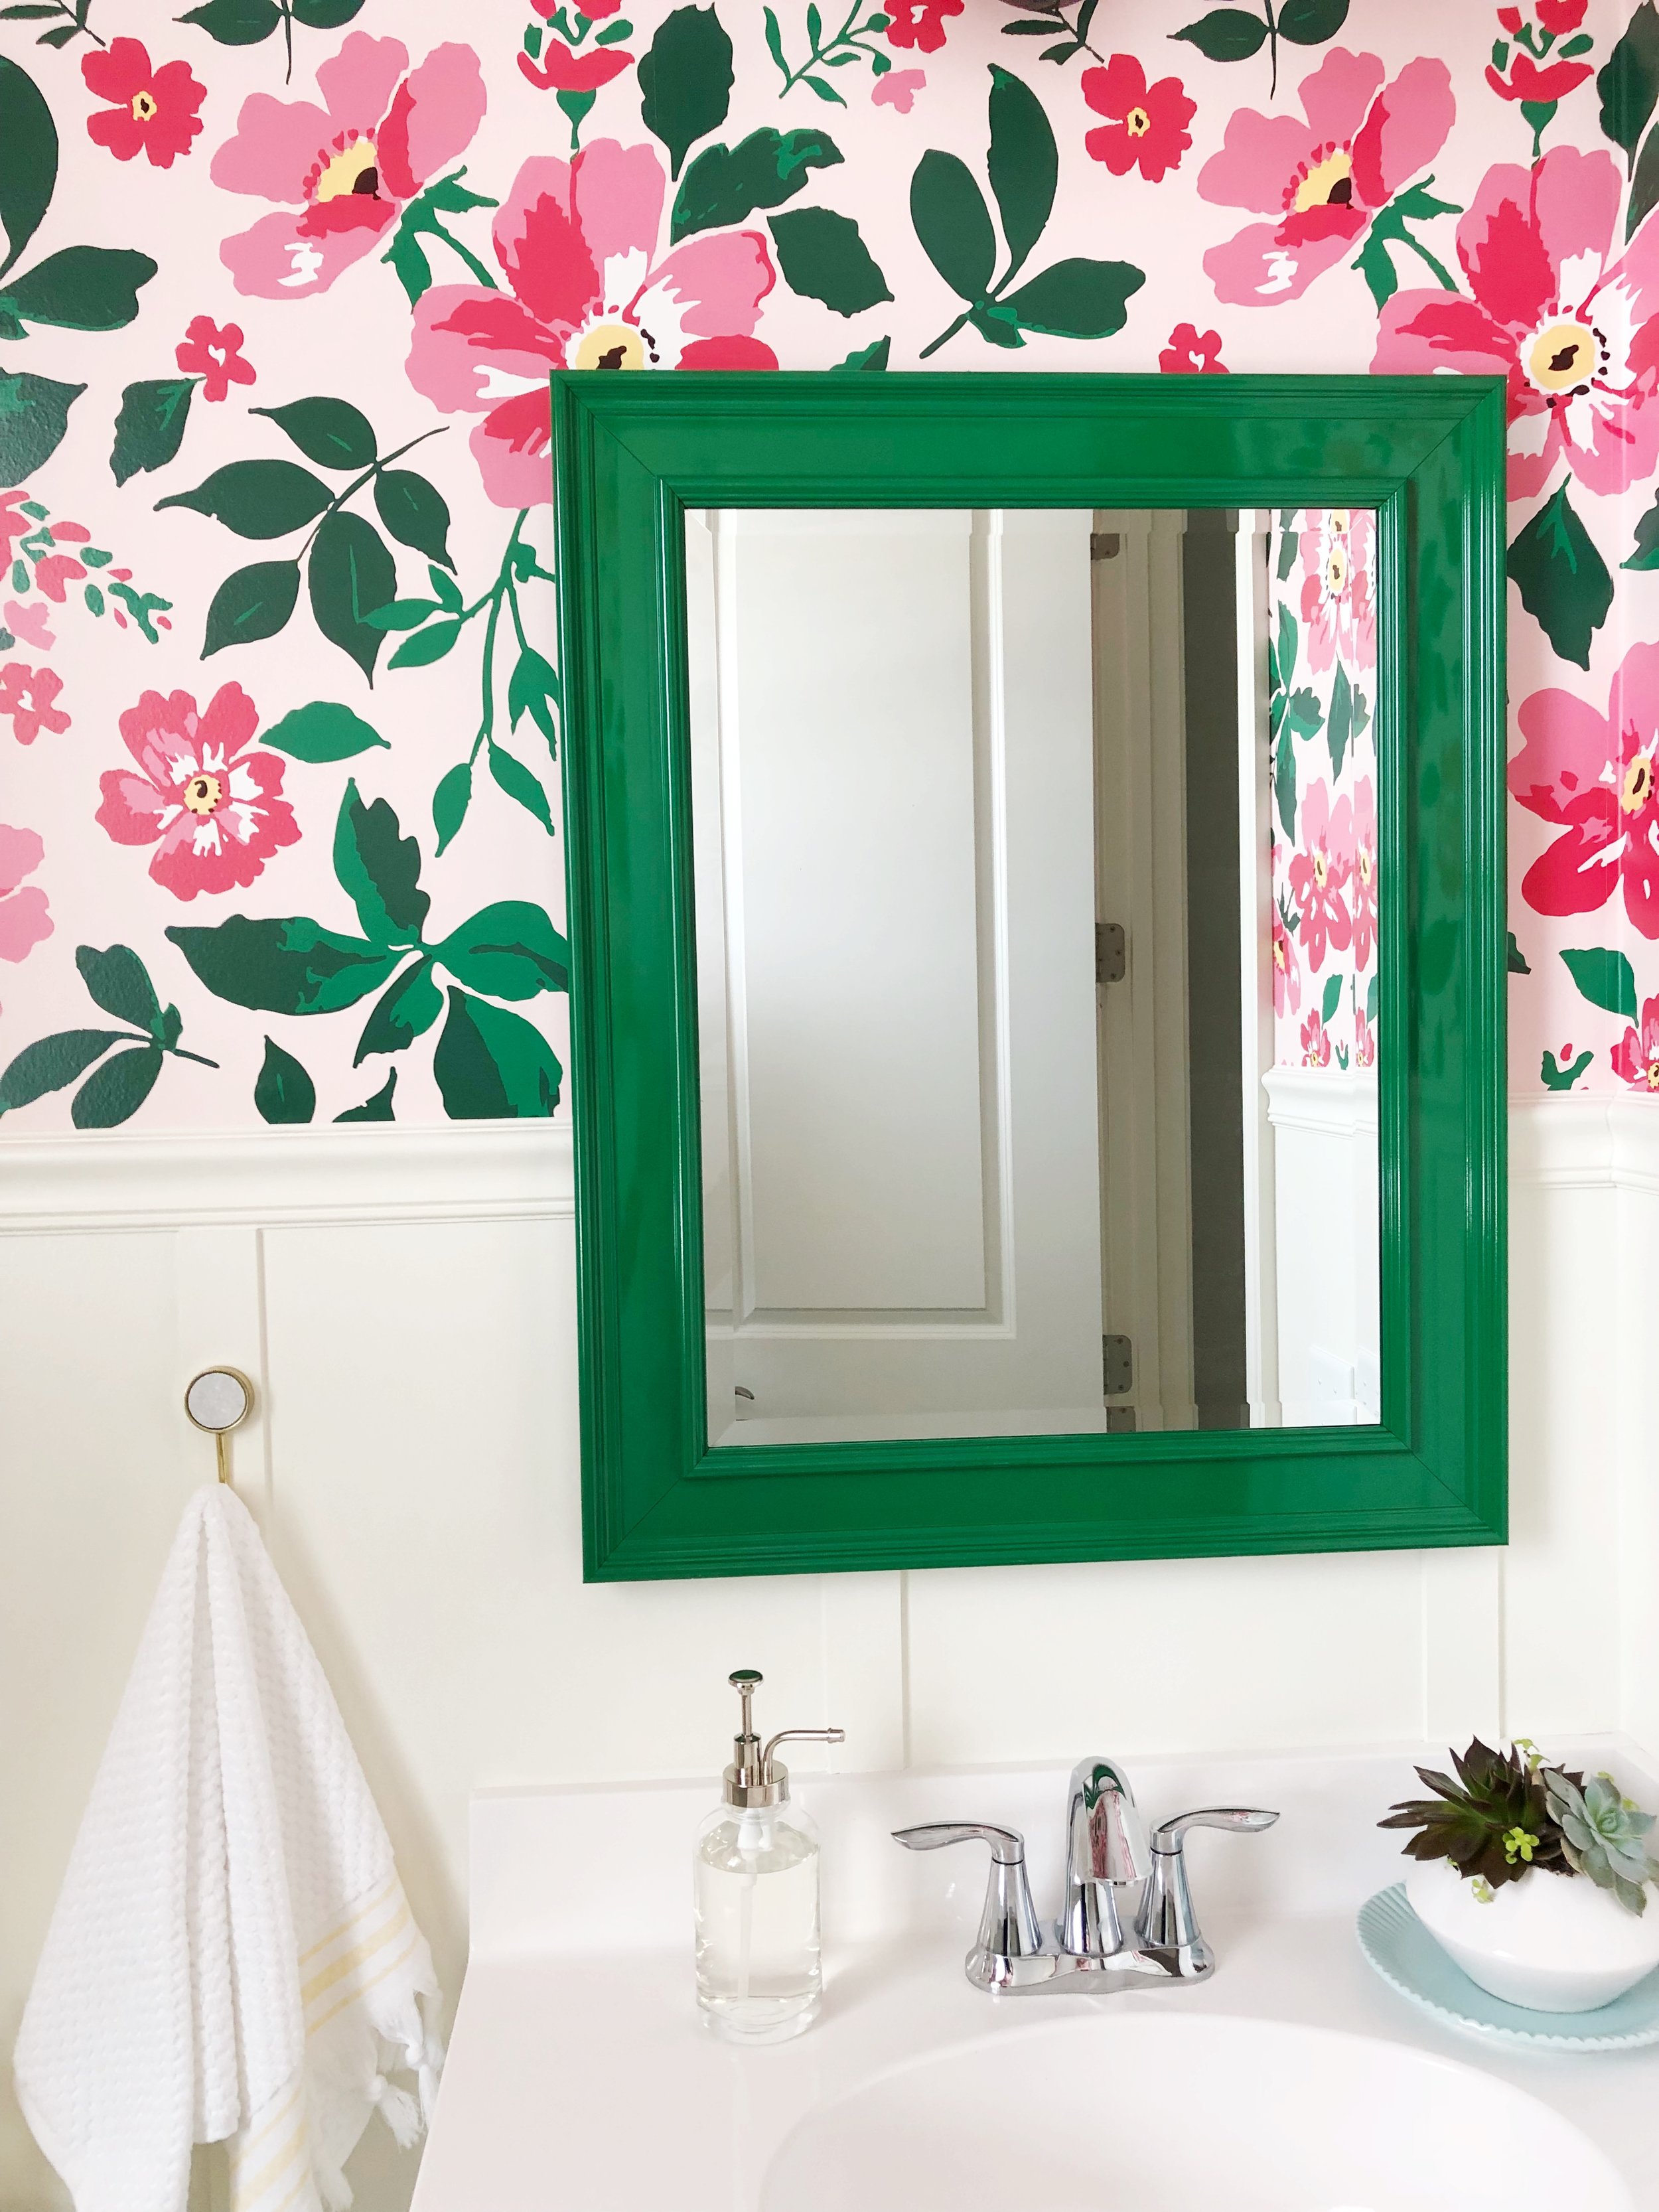 Wallpaper Bathroom with Spoonflower custom wallpaper. Board and Batten Powder Room. Green Mirror.